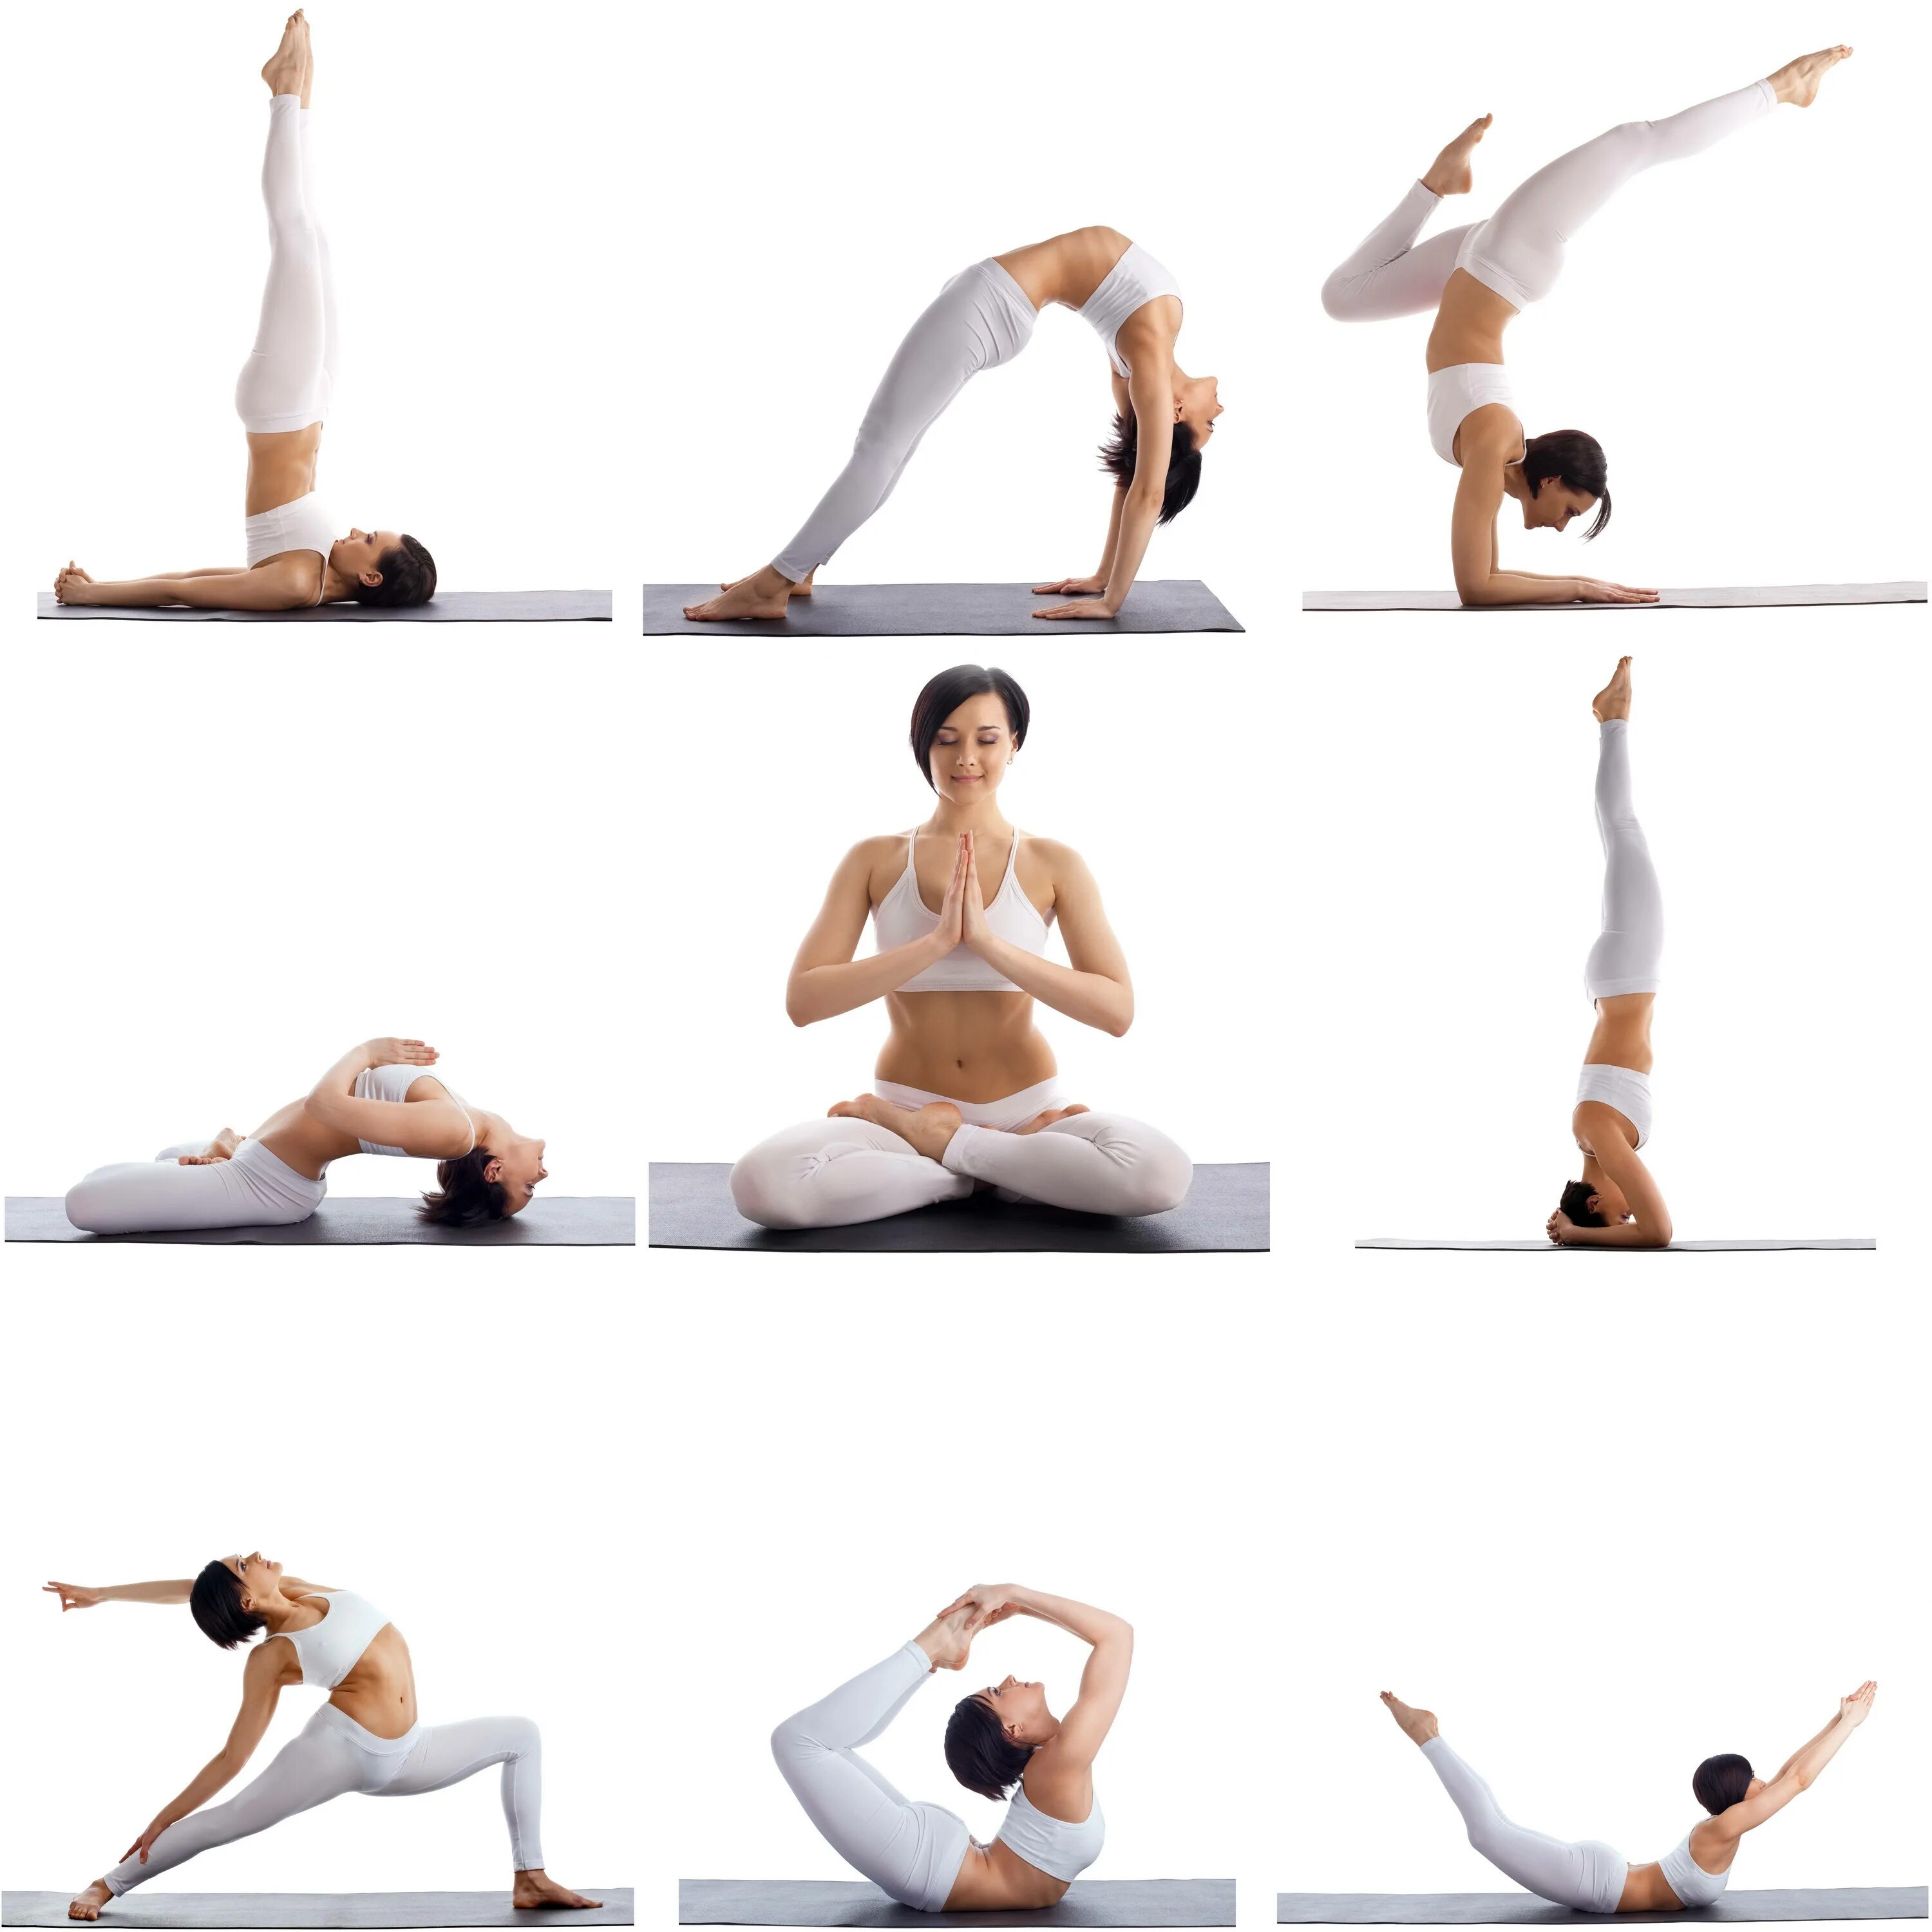 Каталог асан. Основные асаны хатха йоги для начинающих. Хатха-йога комплекс асан. Хатха йога упражнения для начинающих. Комплекс асан хатха йоги.